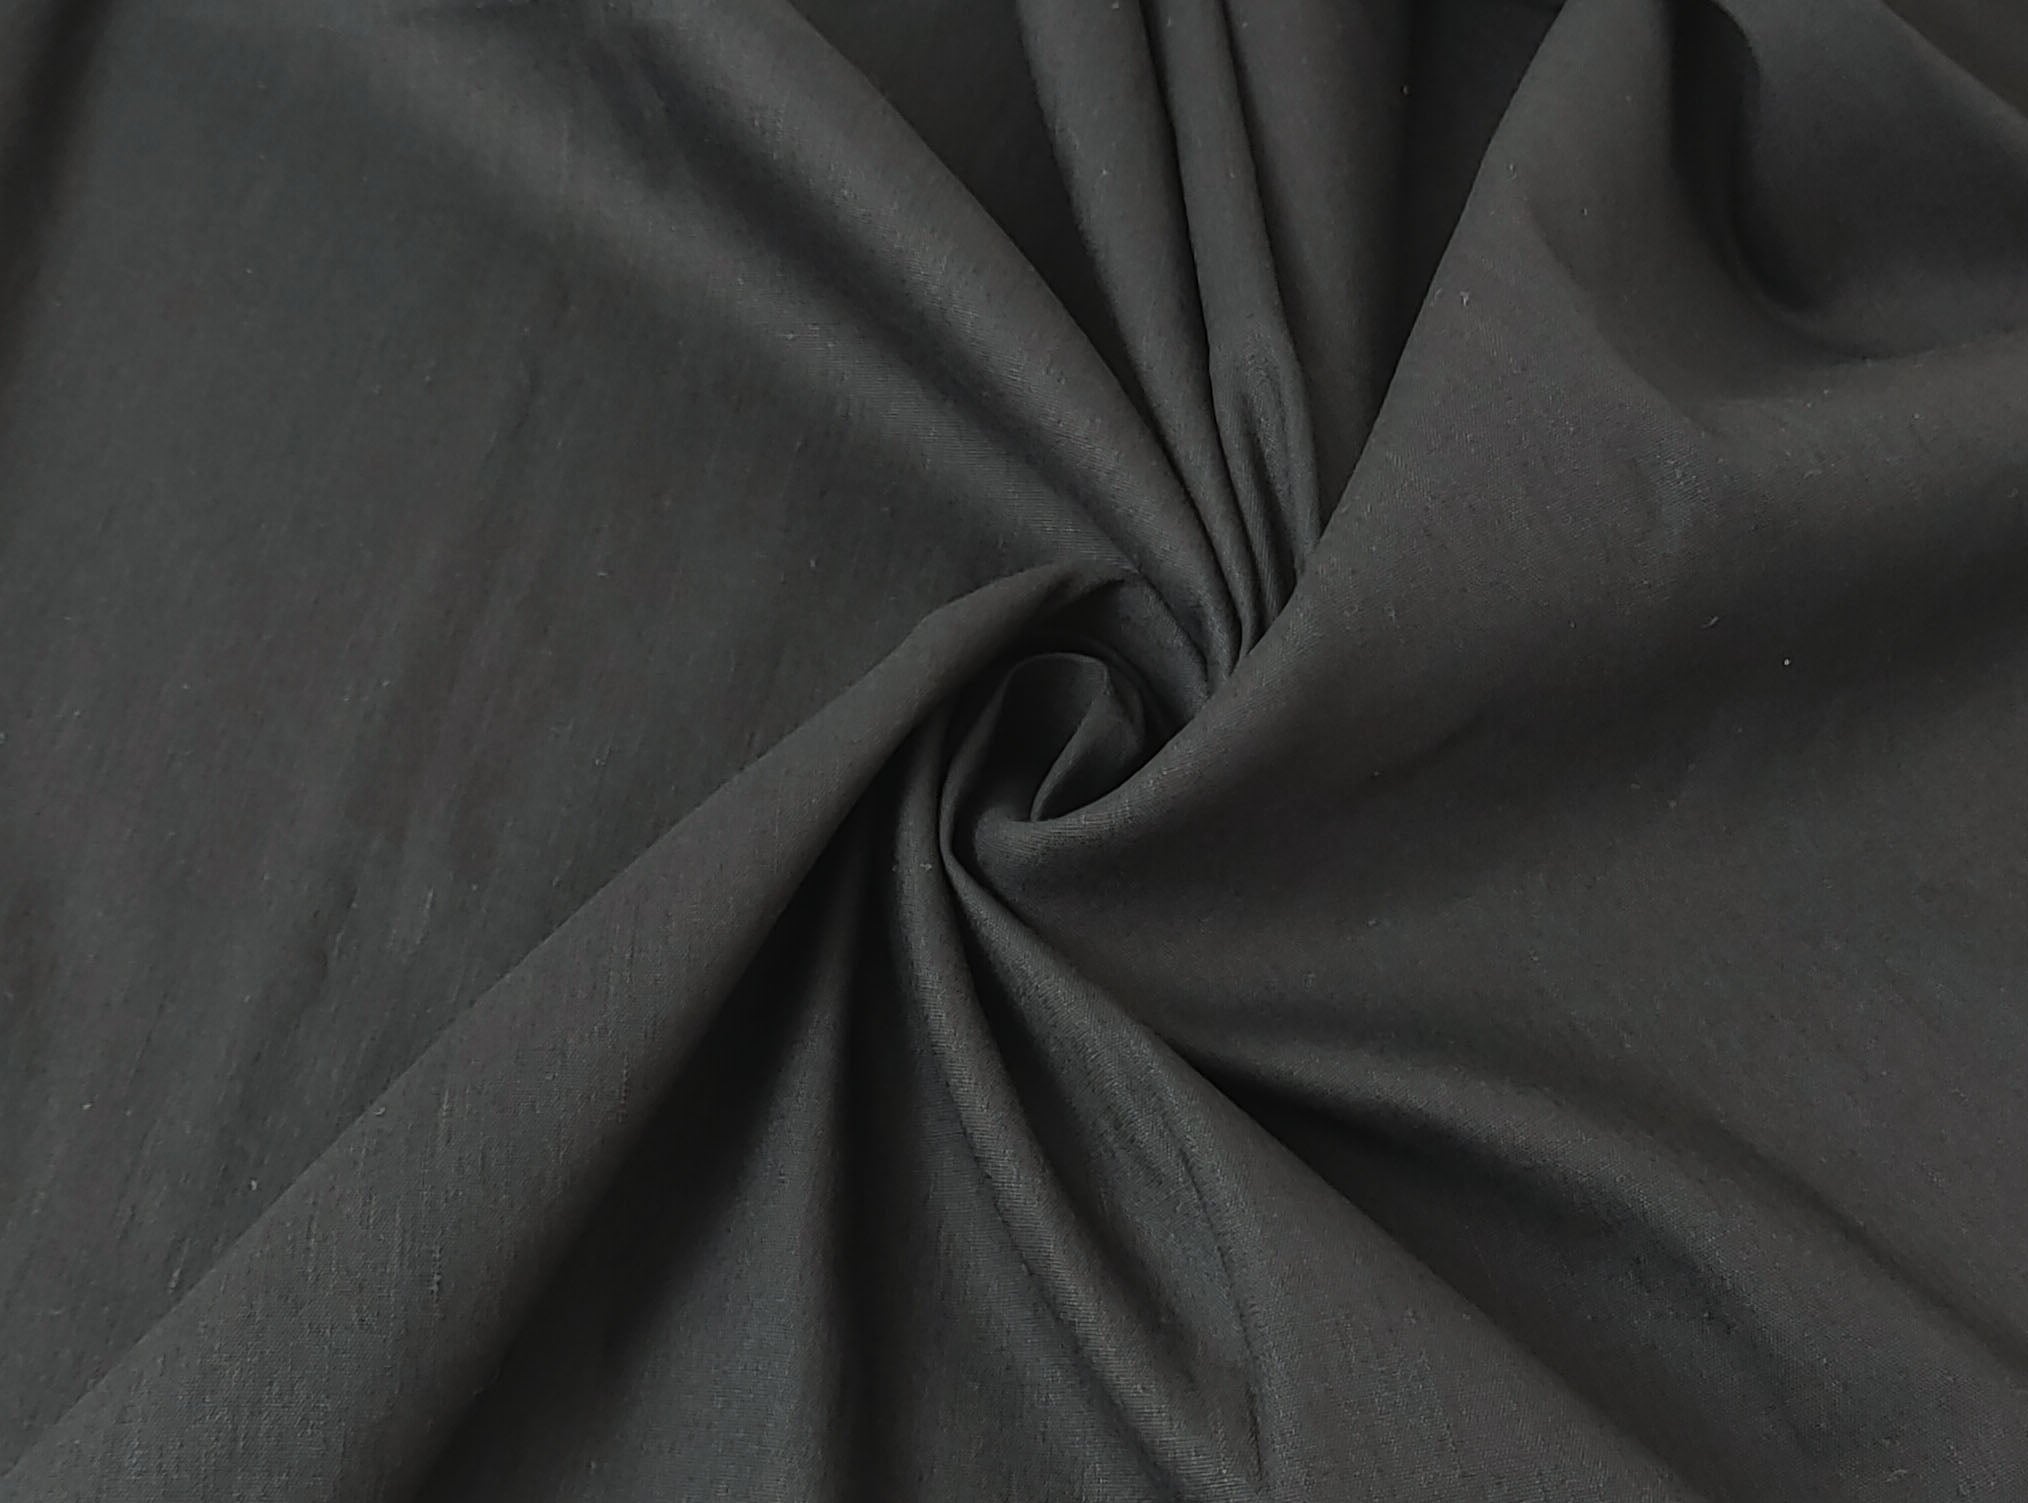 Donna Linen - High Density Linen Rayon Stretch Fabric 4025 4024 5982 4803 4579 4578 4023 3978 - The Linen Lab - Black